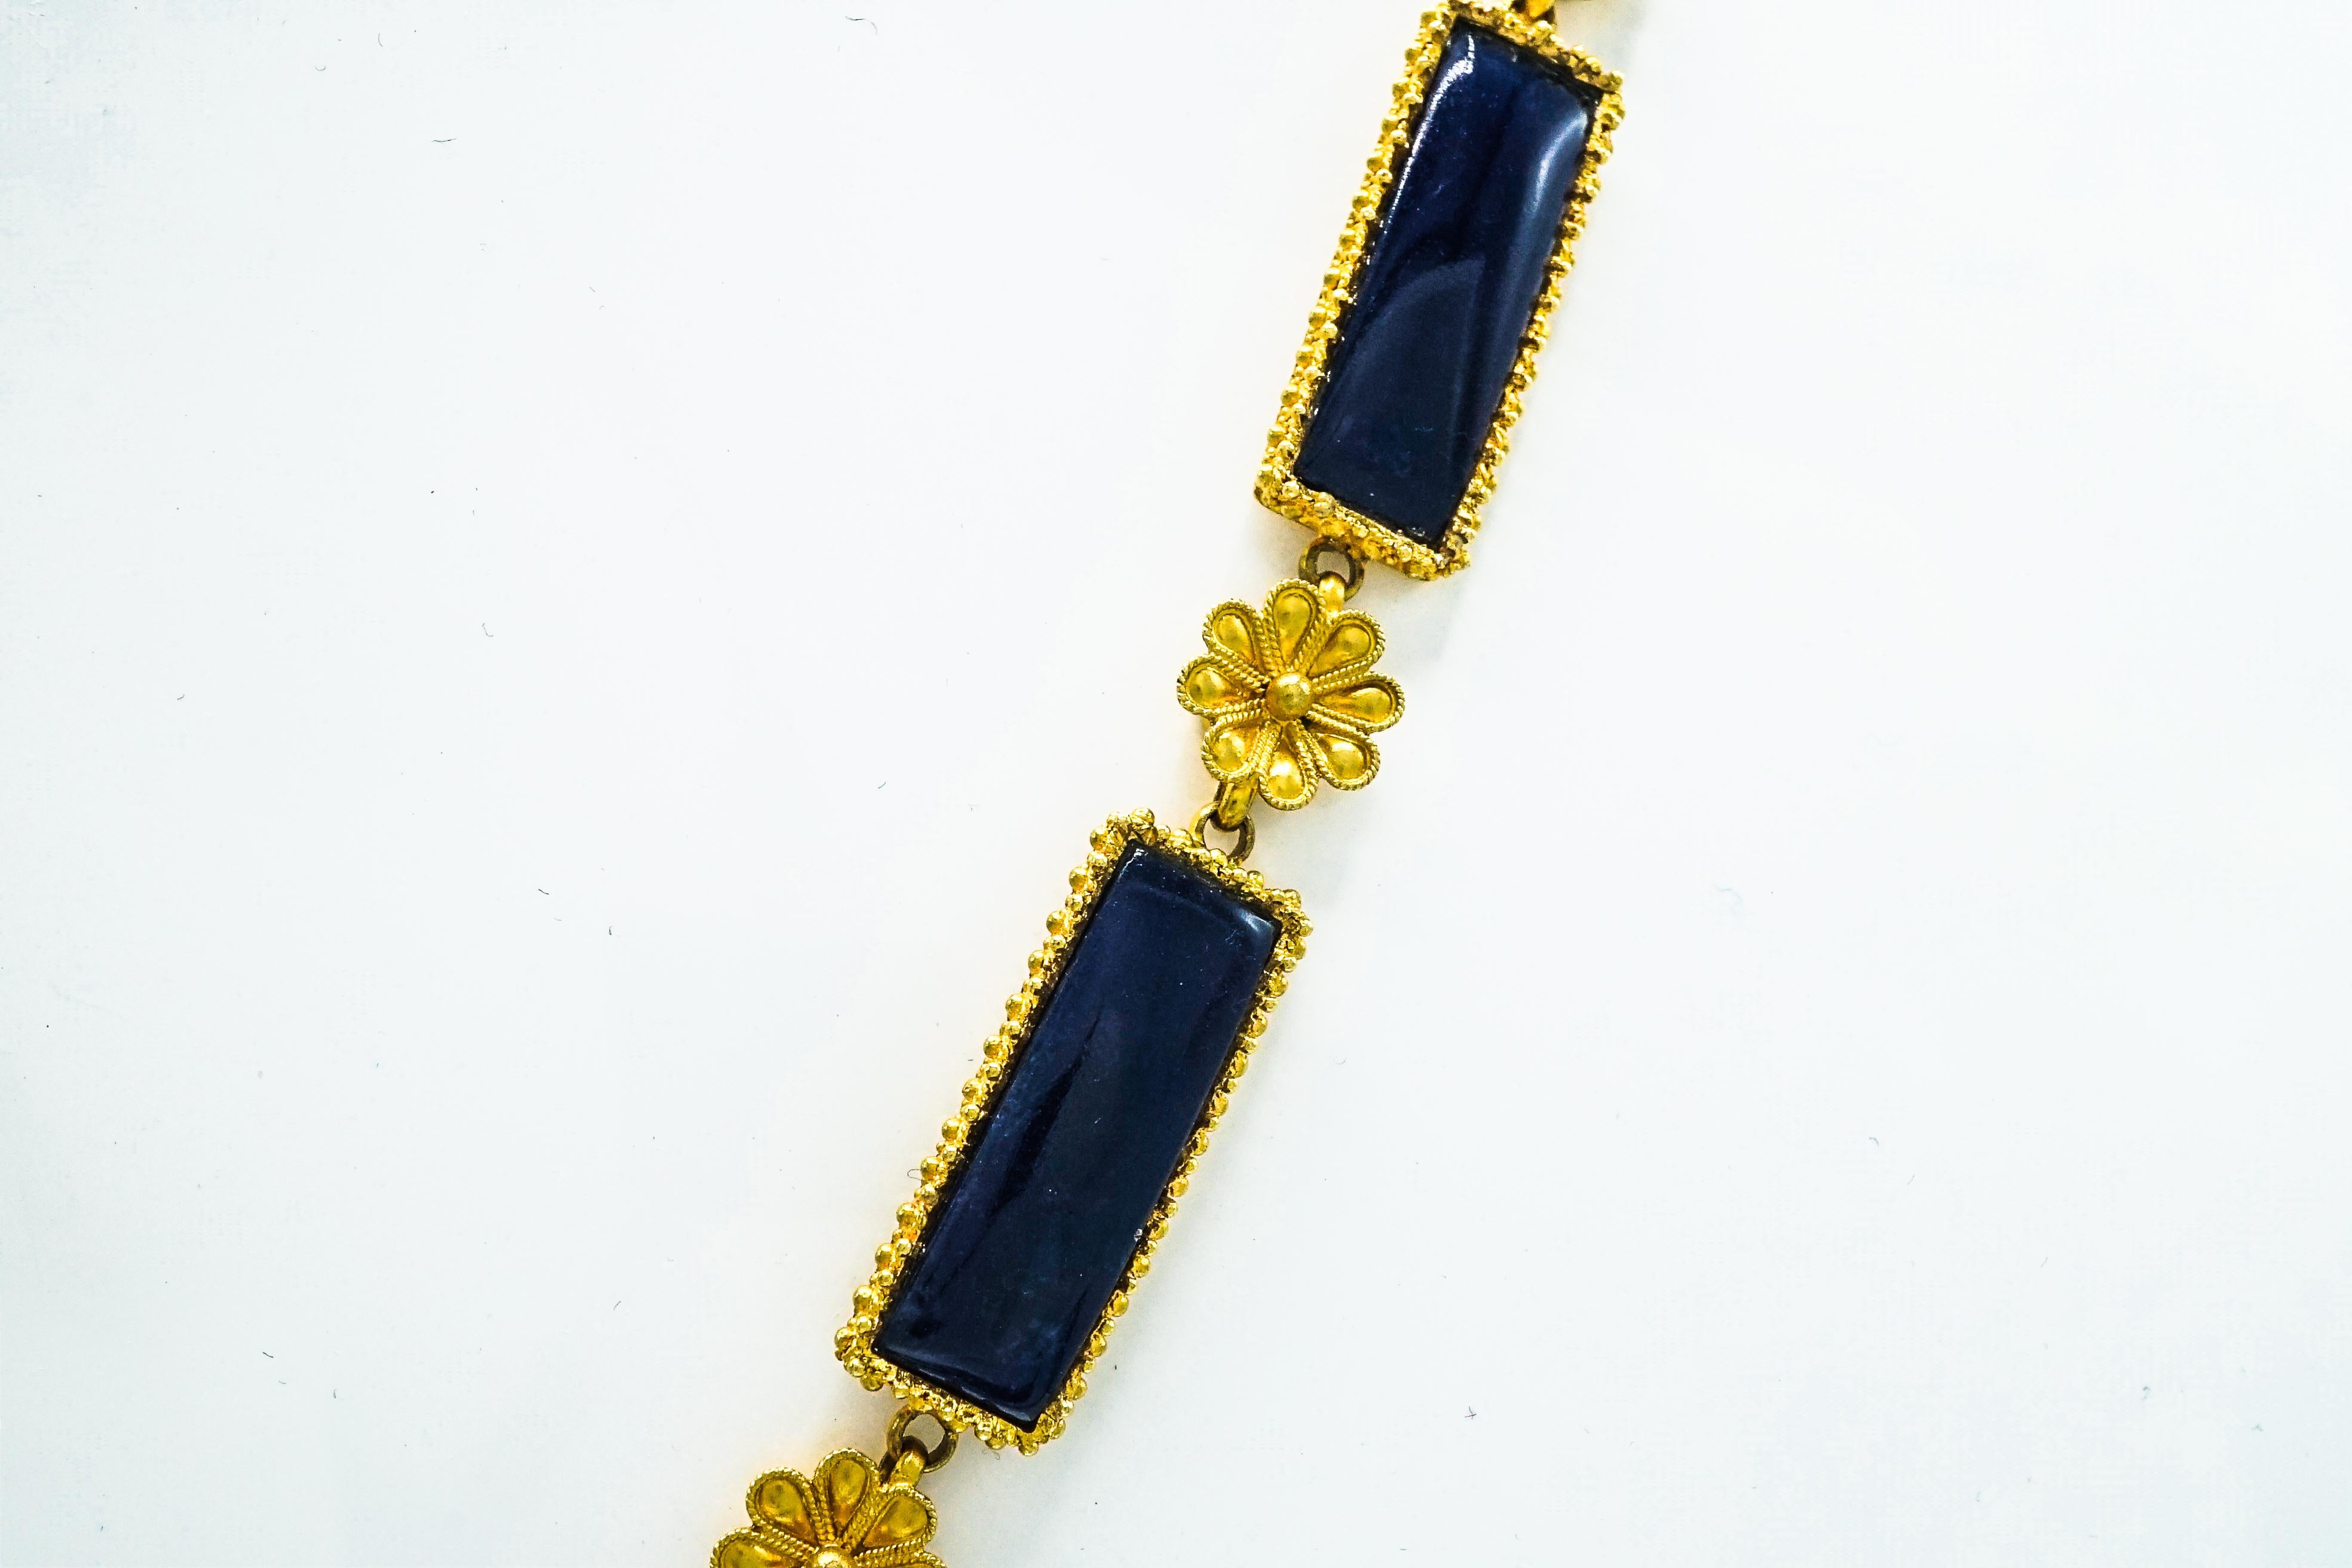 Llias Lalounis 22 Karat Gold and Sodalite Pendant-Necklace For Sale 2